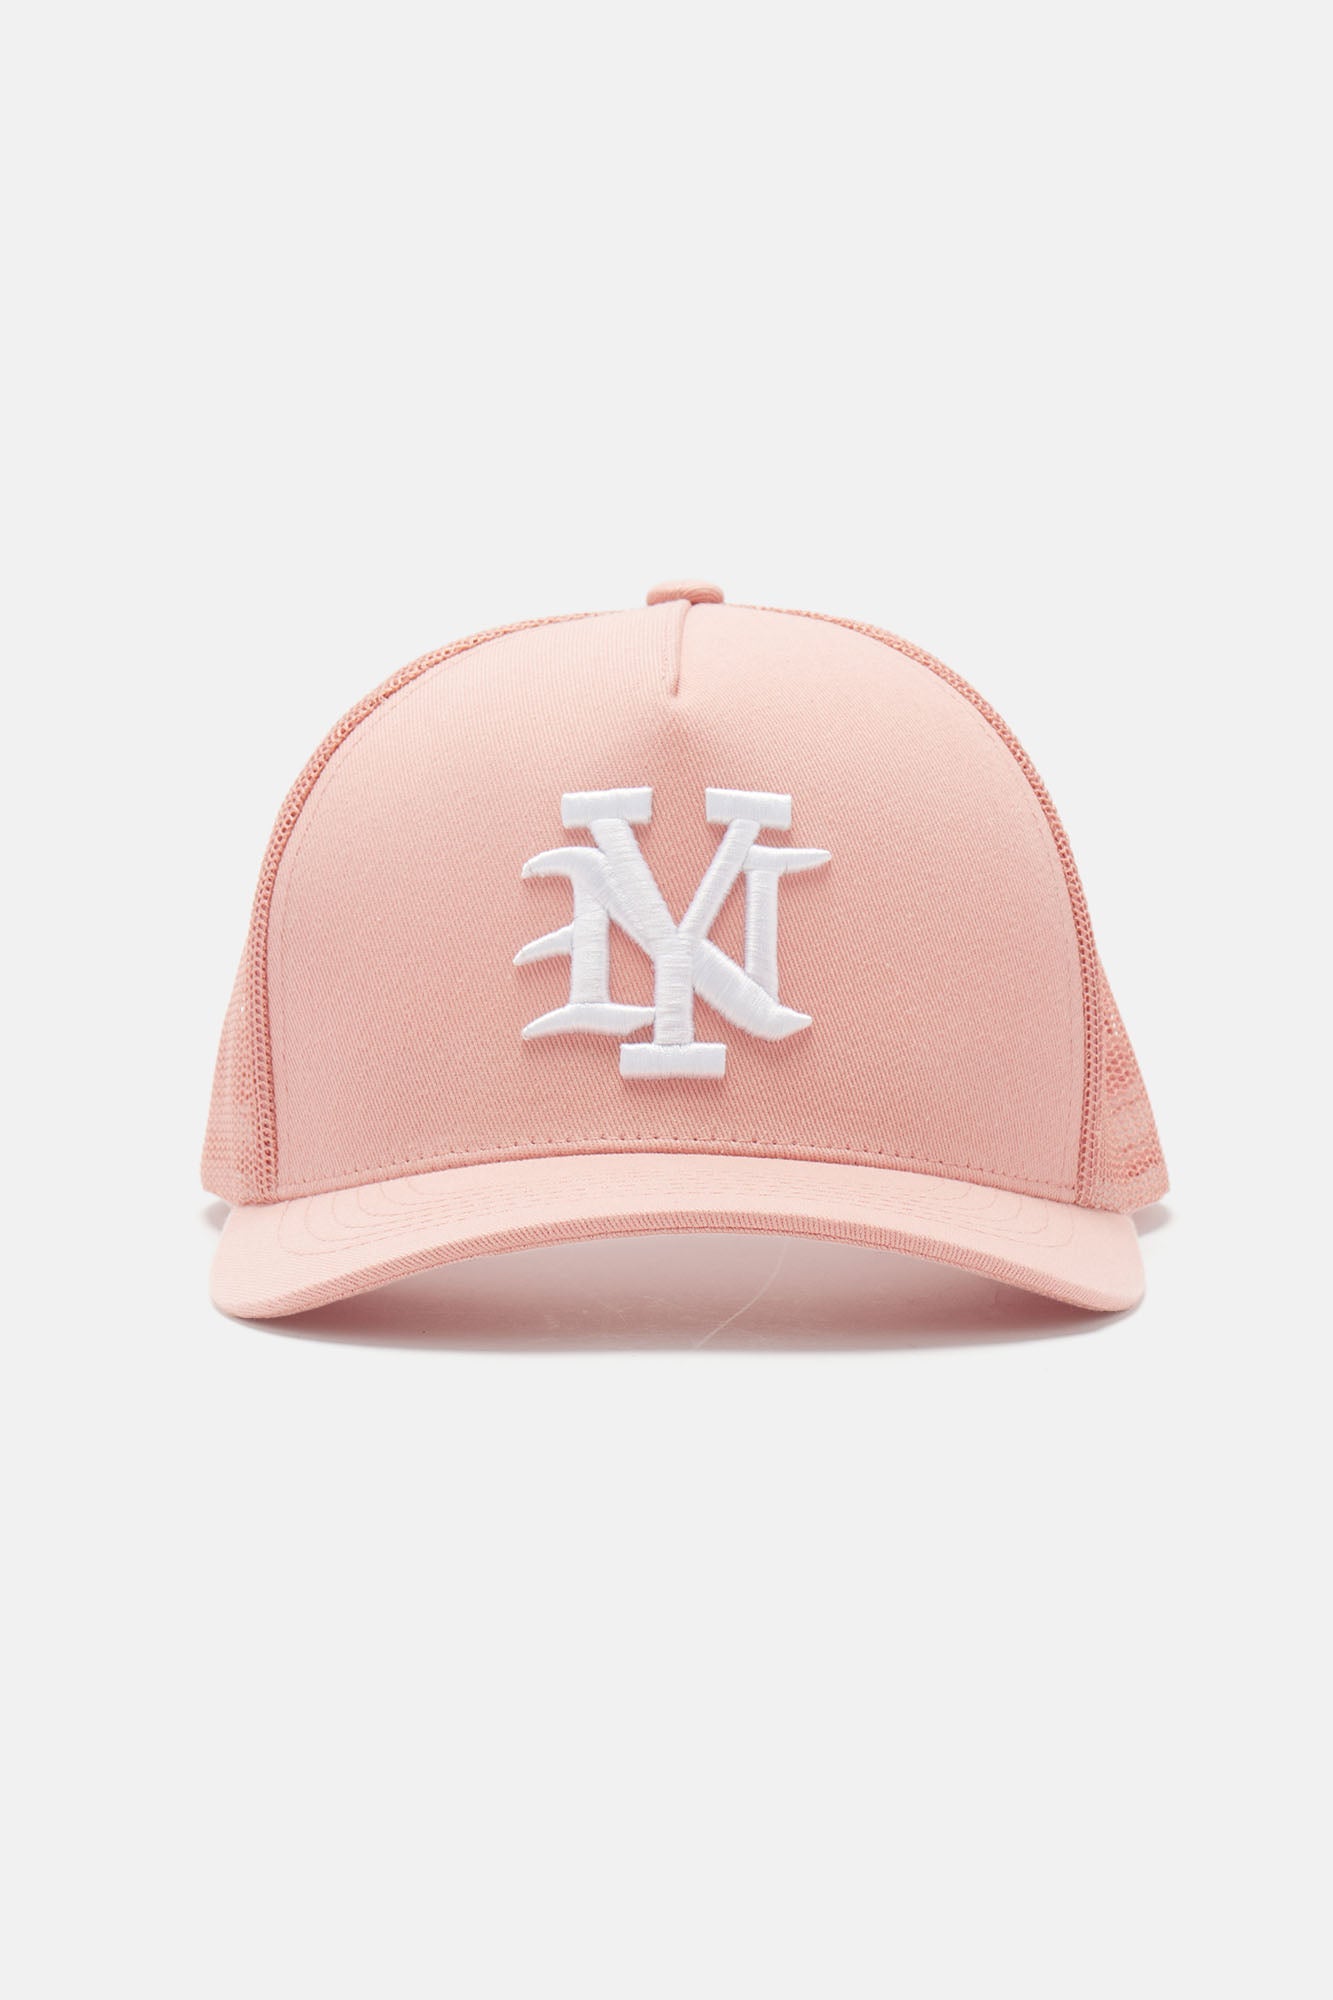 NY Mauve Twill Trucker Hat: Your Stylish Statement Piece